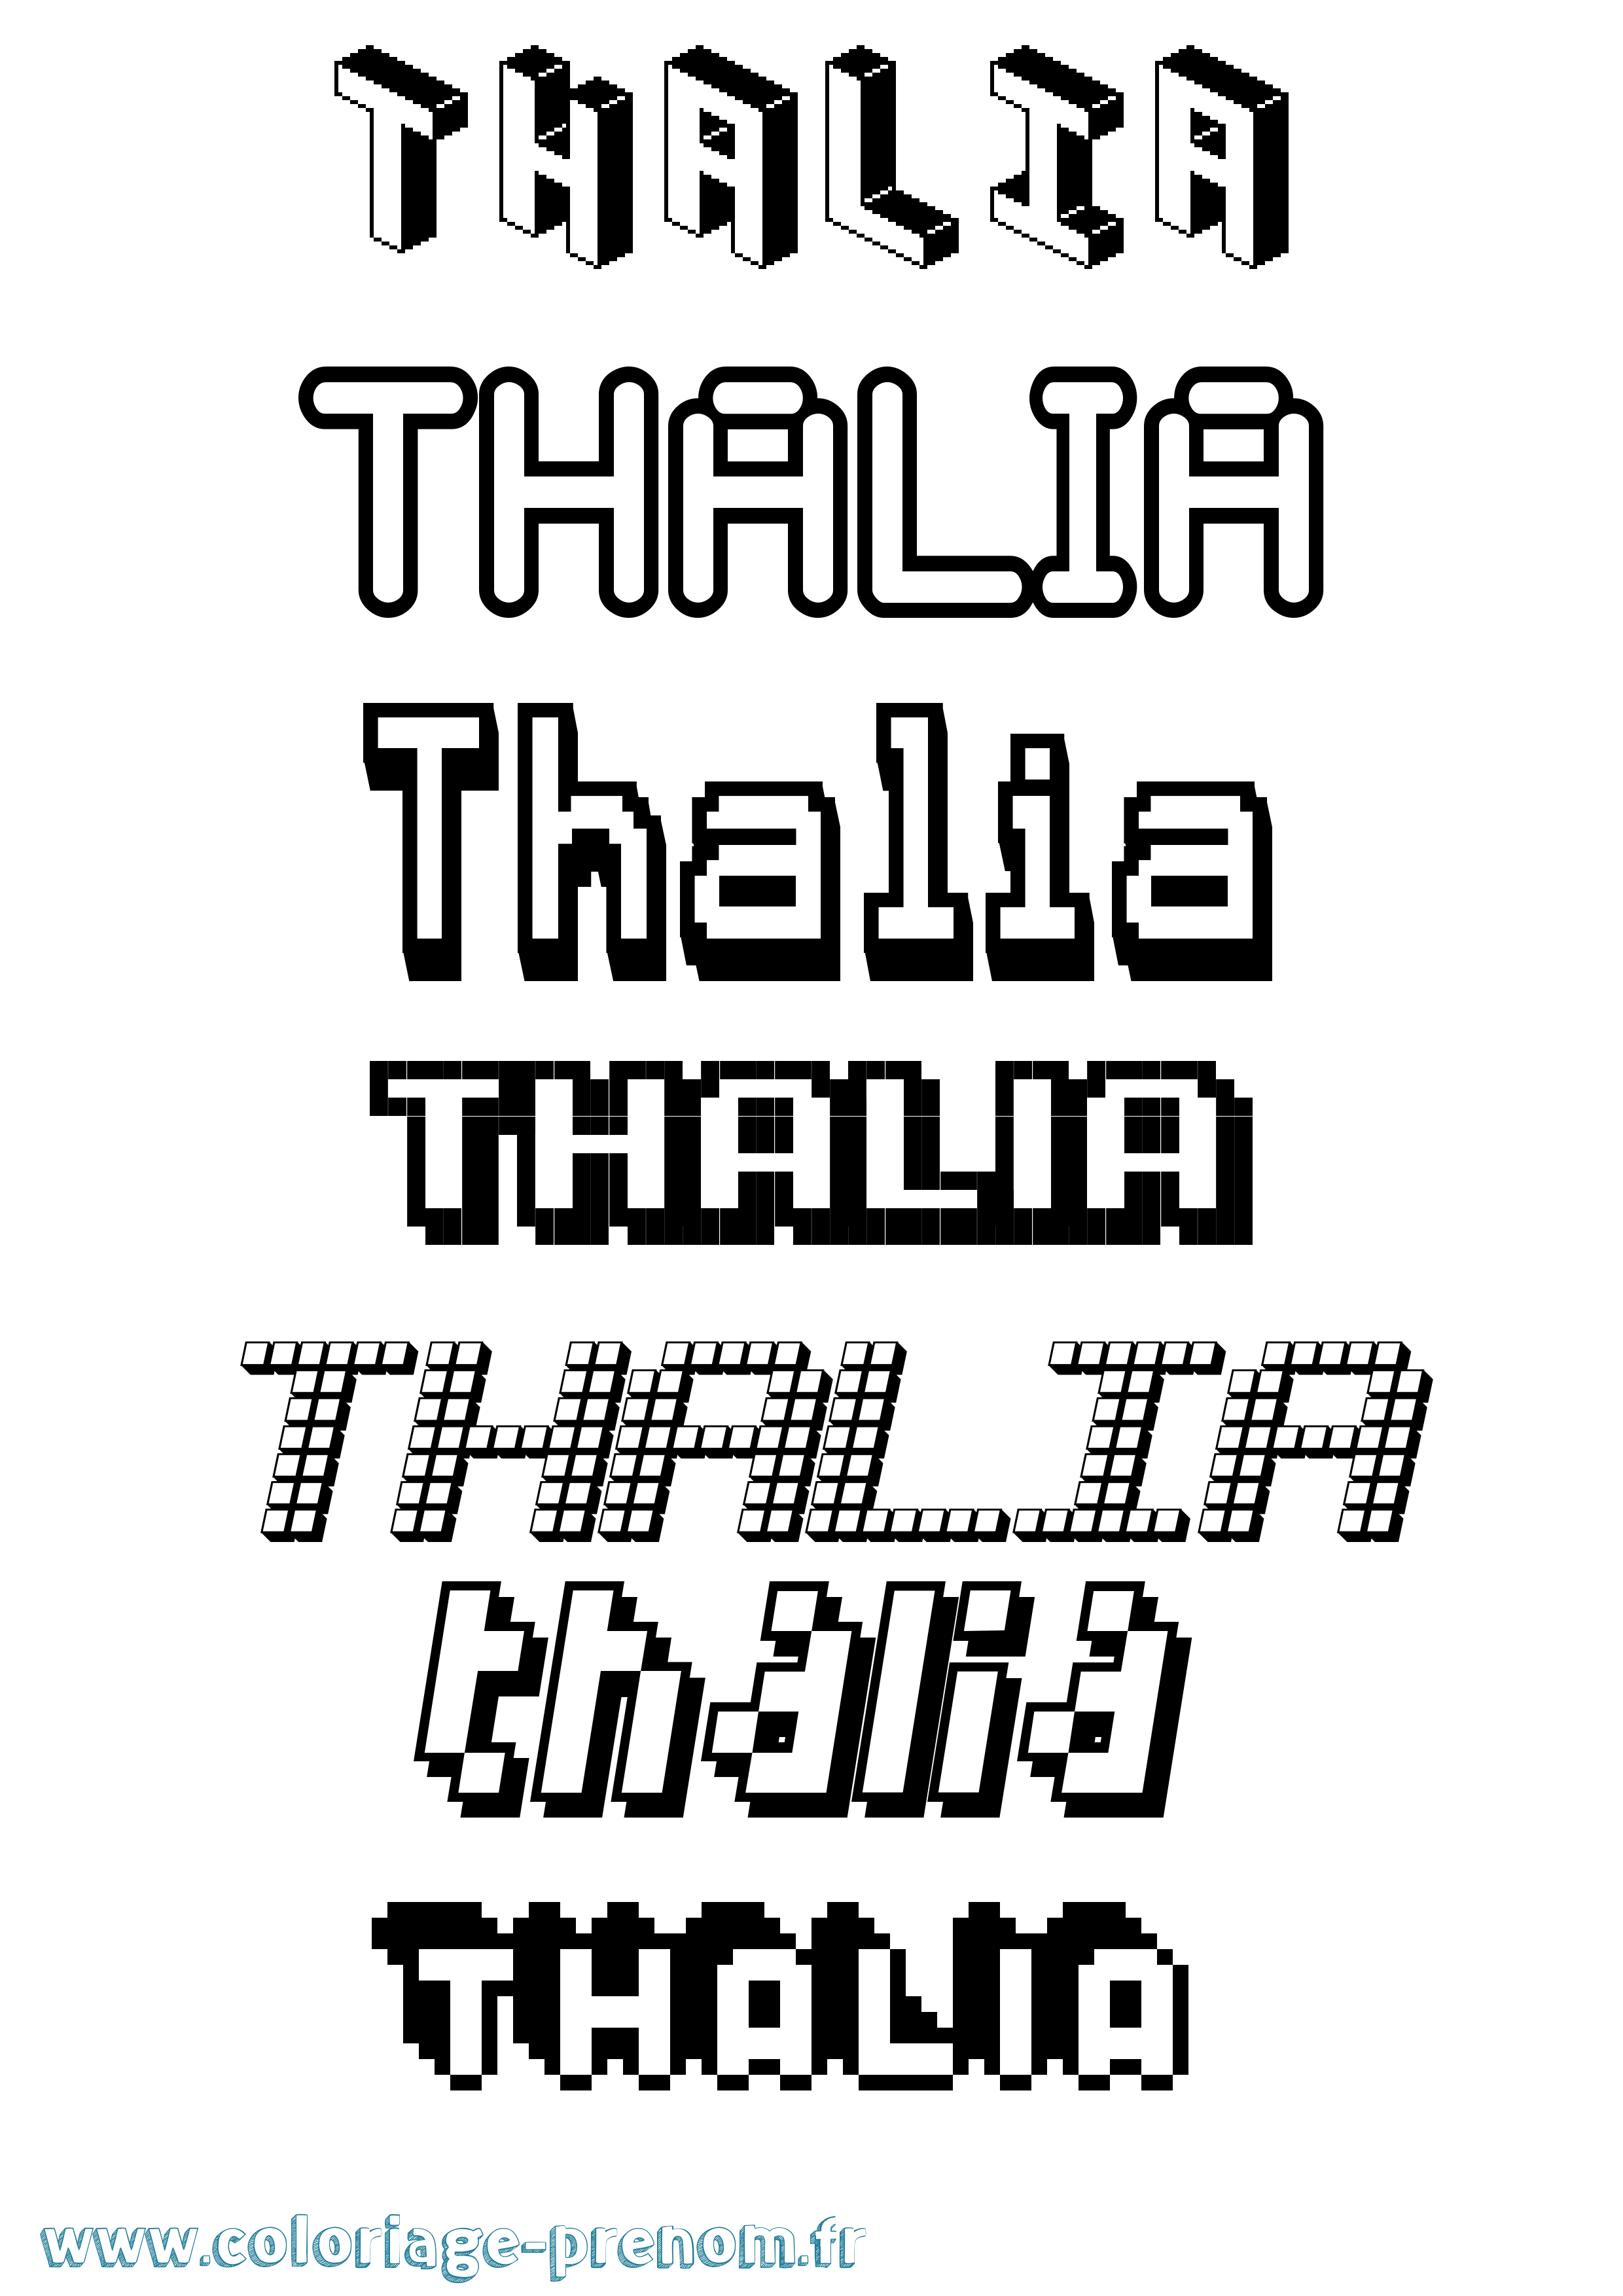 Coloriage prénom Thalia Pixel